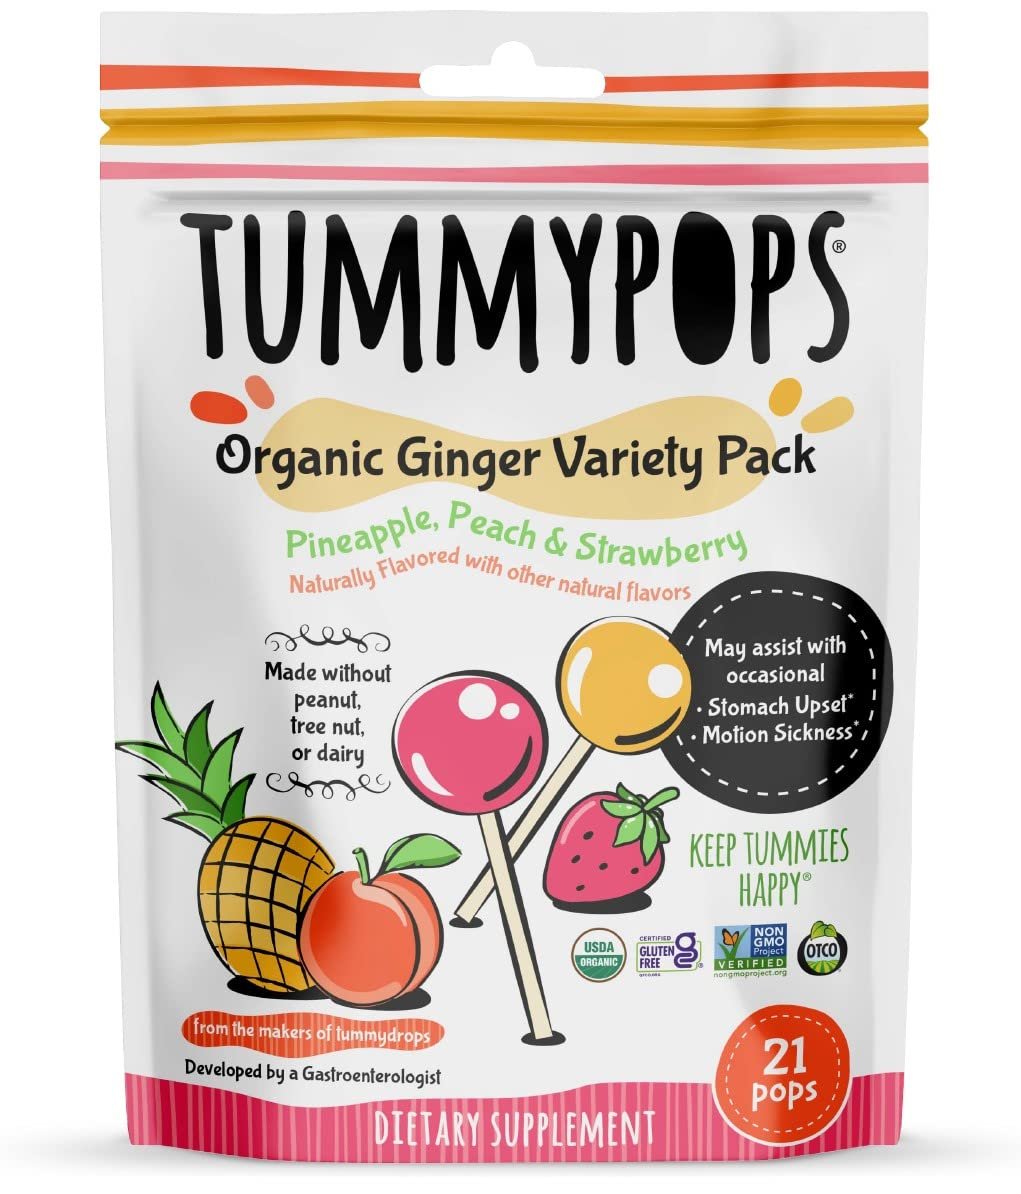 USDA Organic Tummypops Ginger Variety Pack (Pineapple, Peach,  Strawberry)